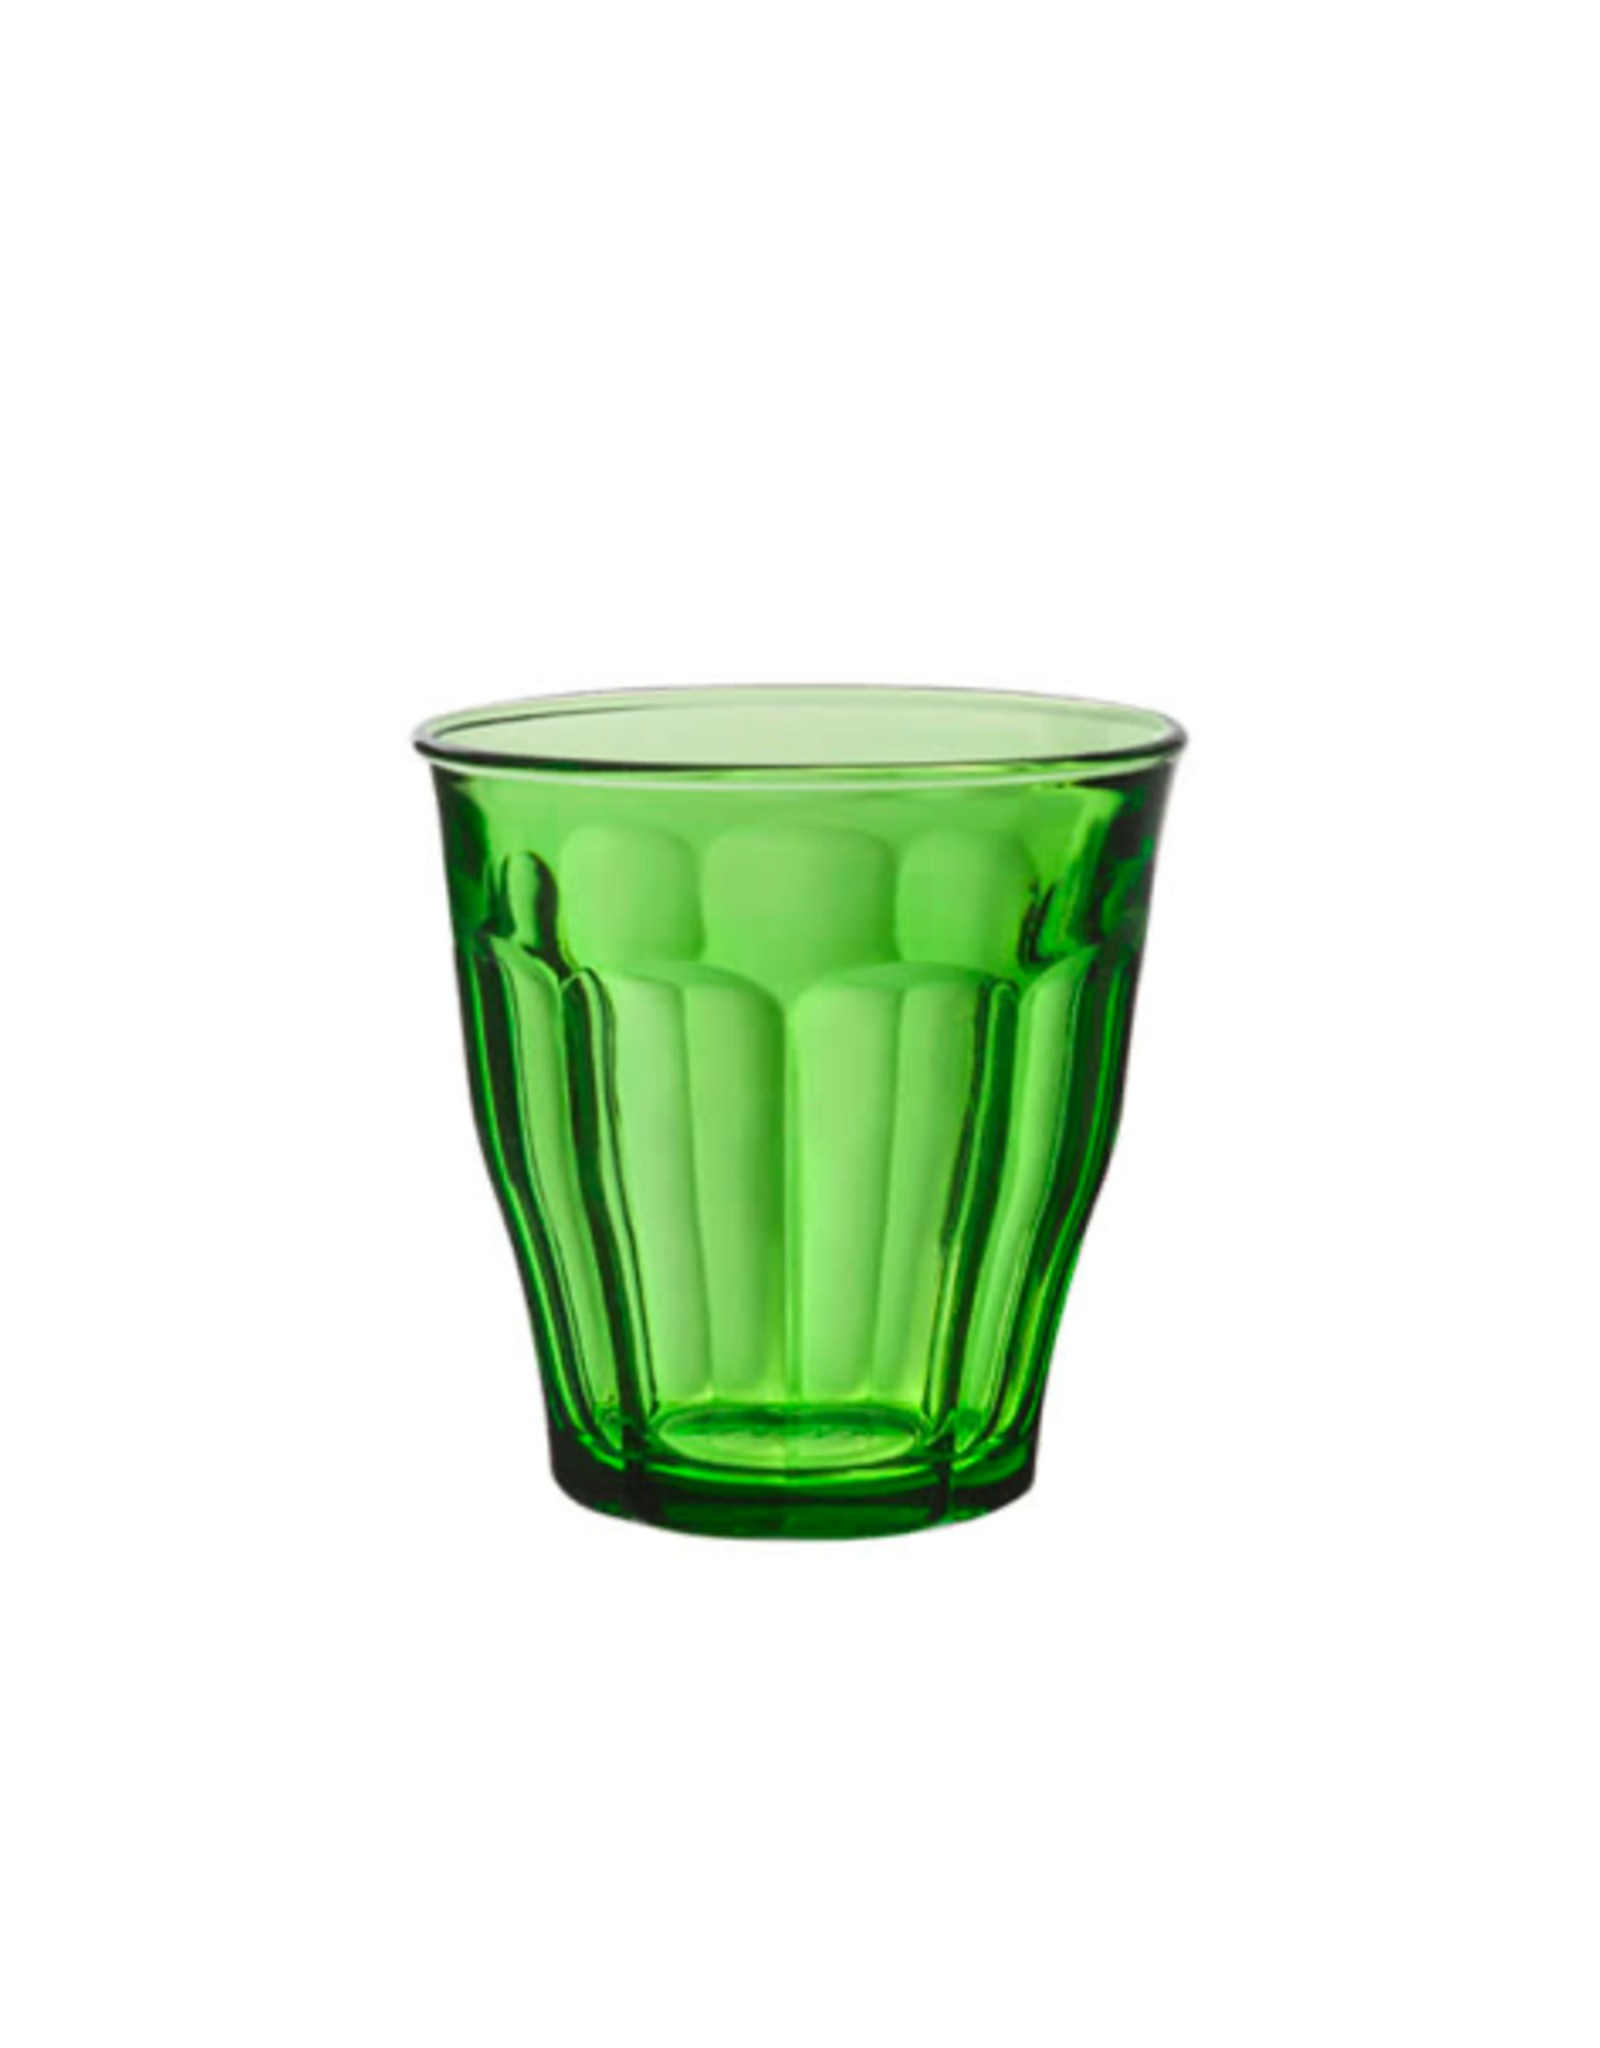 TIMCo ICM - Duralex Glass Tumbler / Picardie, Green, 250ml